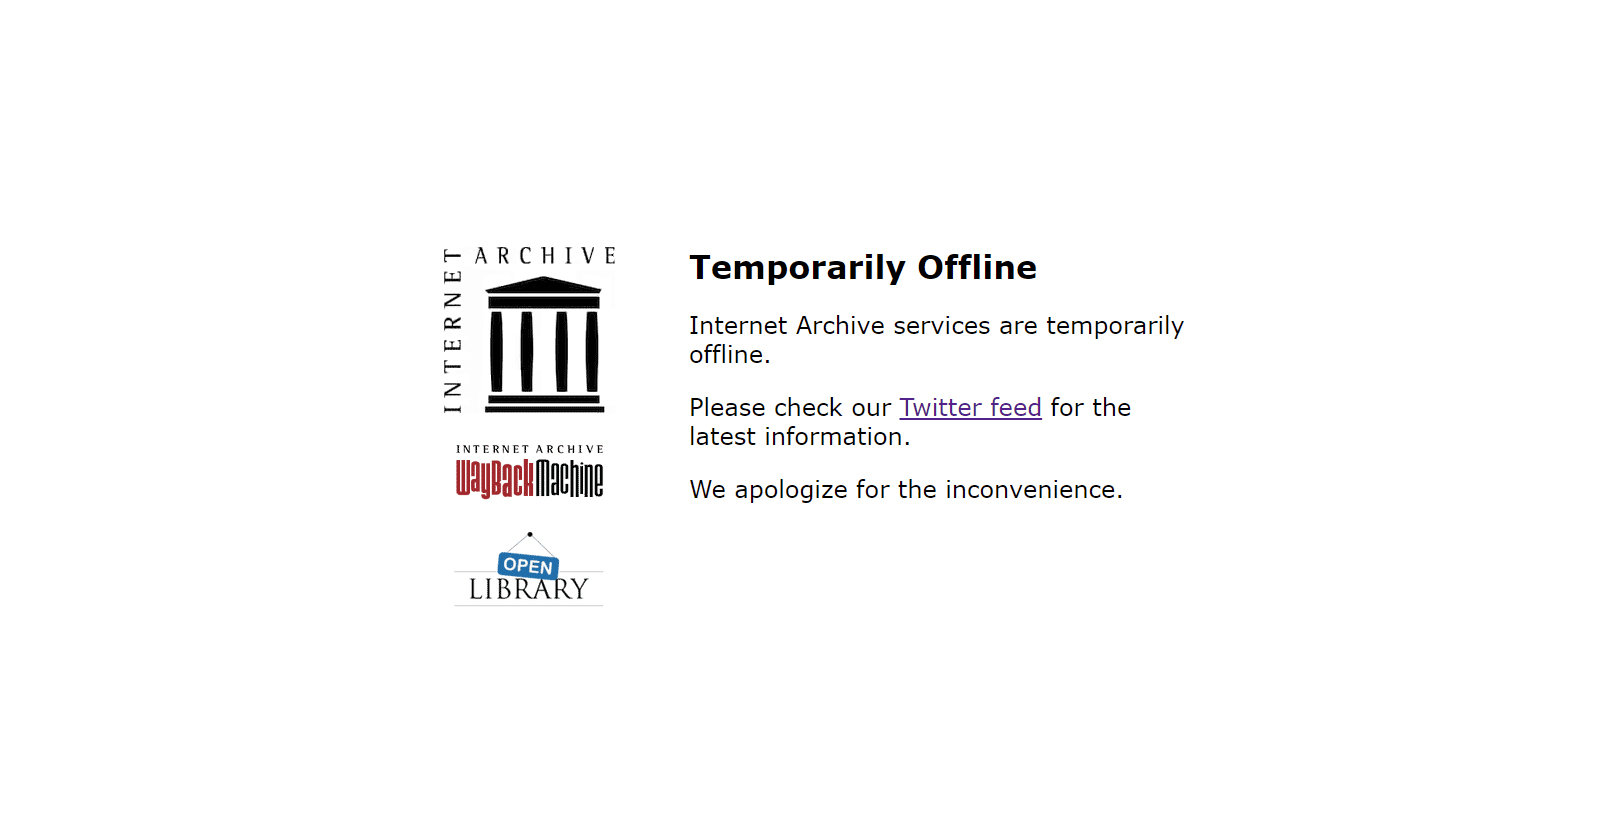 Internet Archive Website Offline for Hours